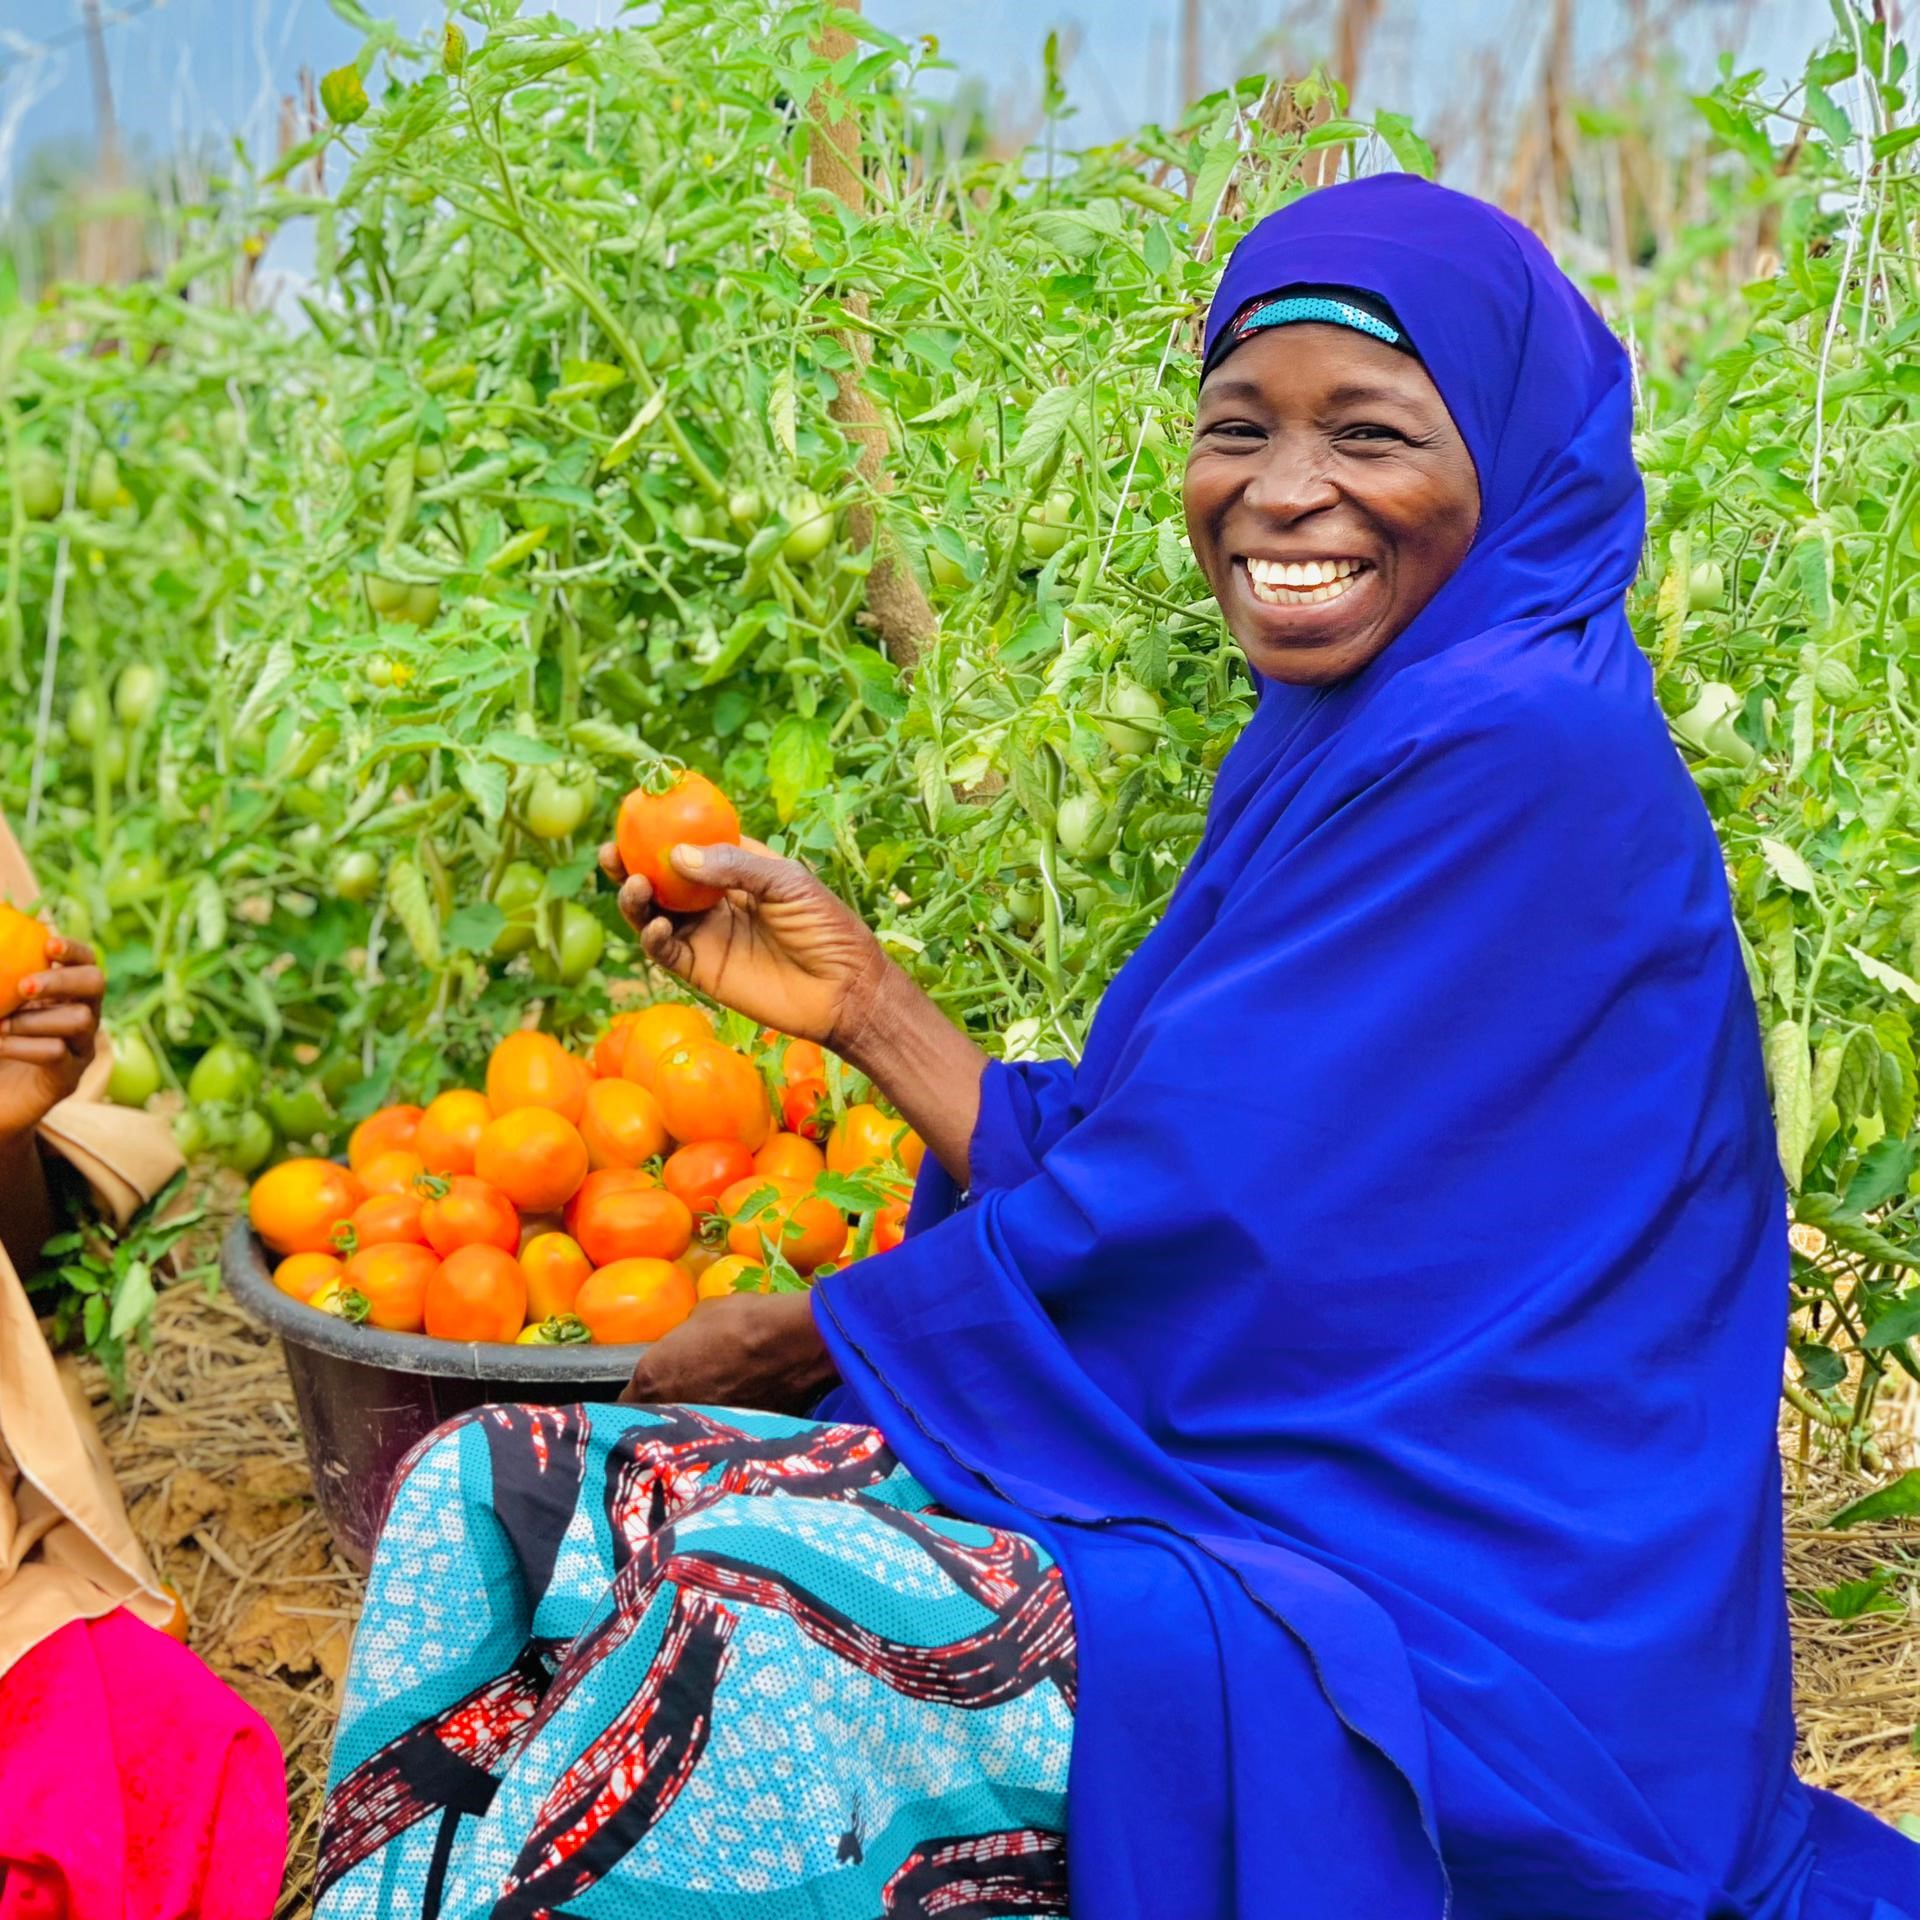 Uwandiya Alhaji smiles broadly as she holds up tomatoes from her harvest.